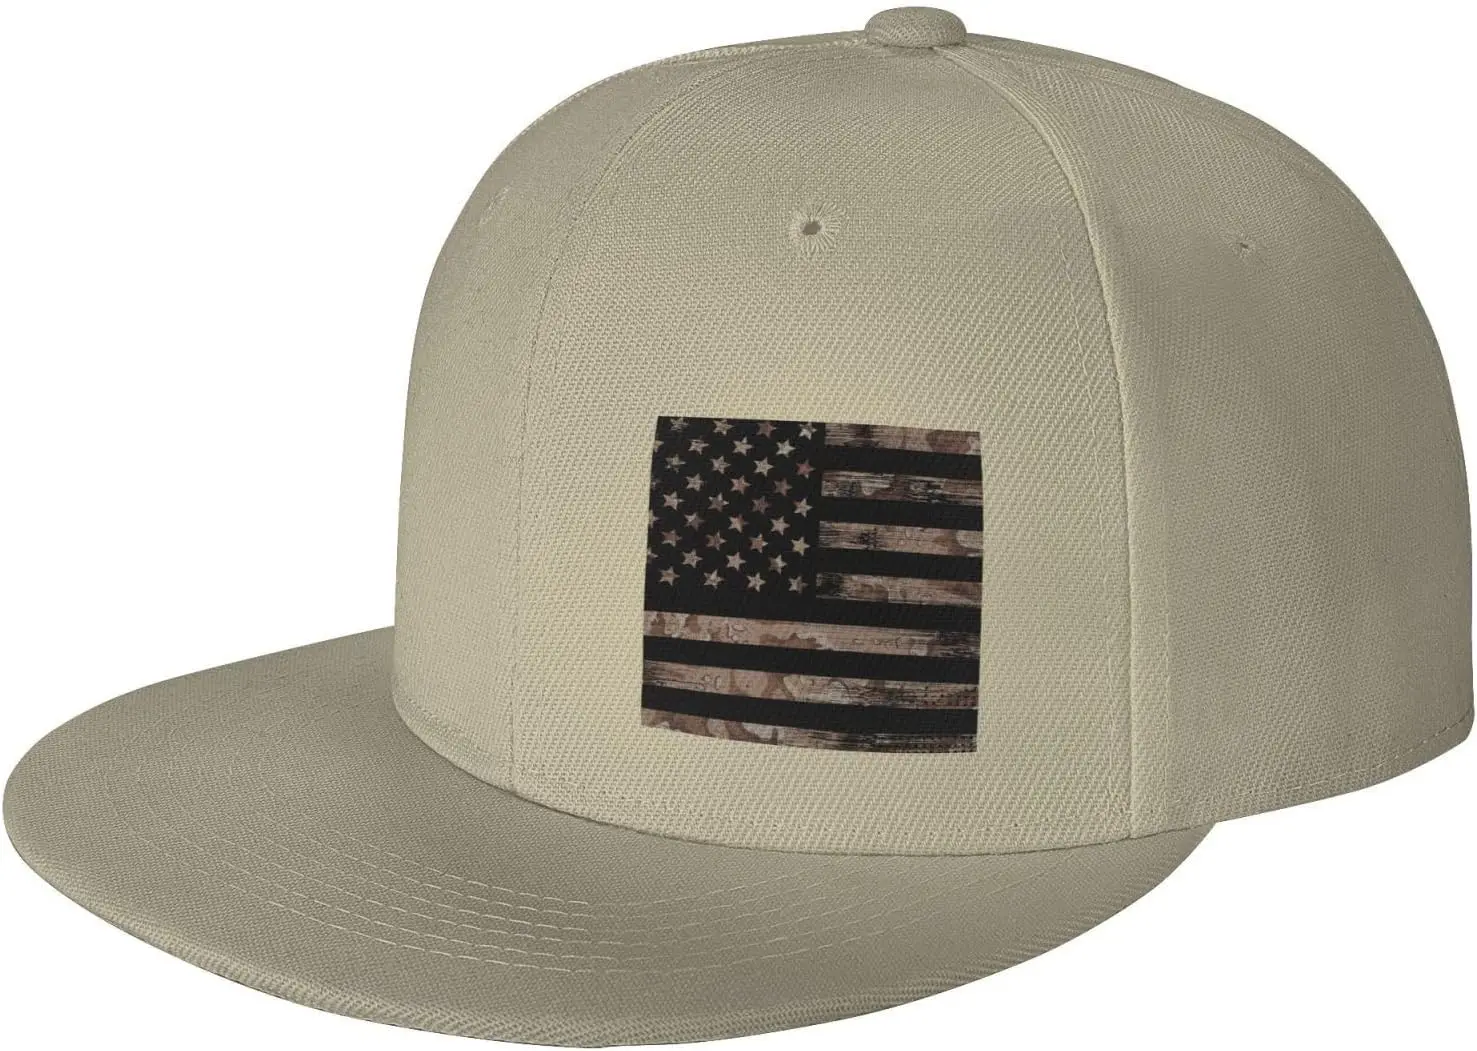 Table hip hop flat bill baseball cap for men women visor snapback hat dad hats american thumb200